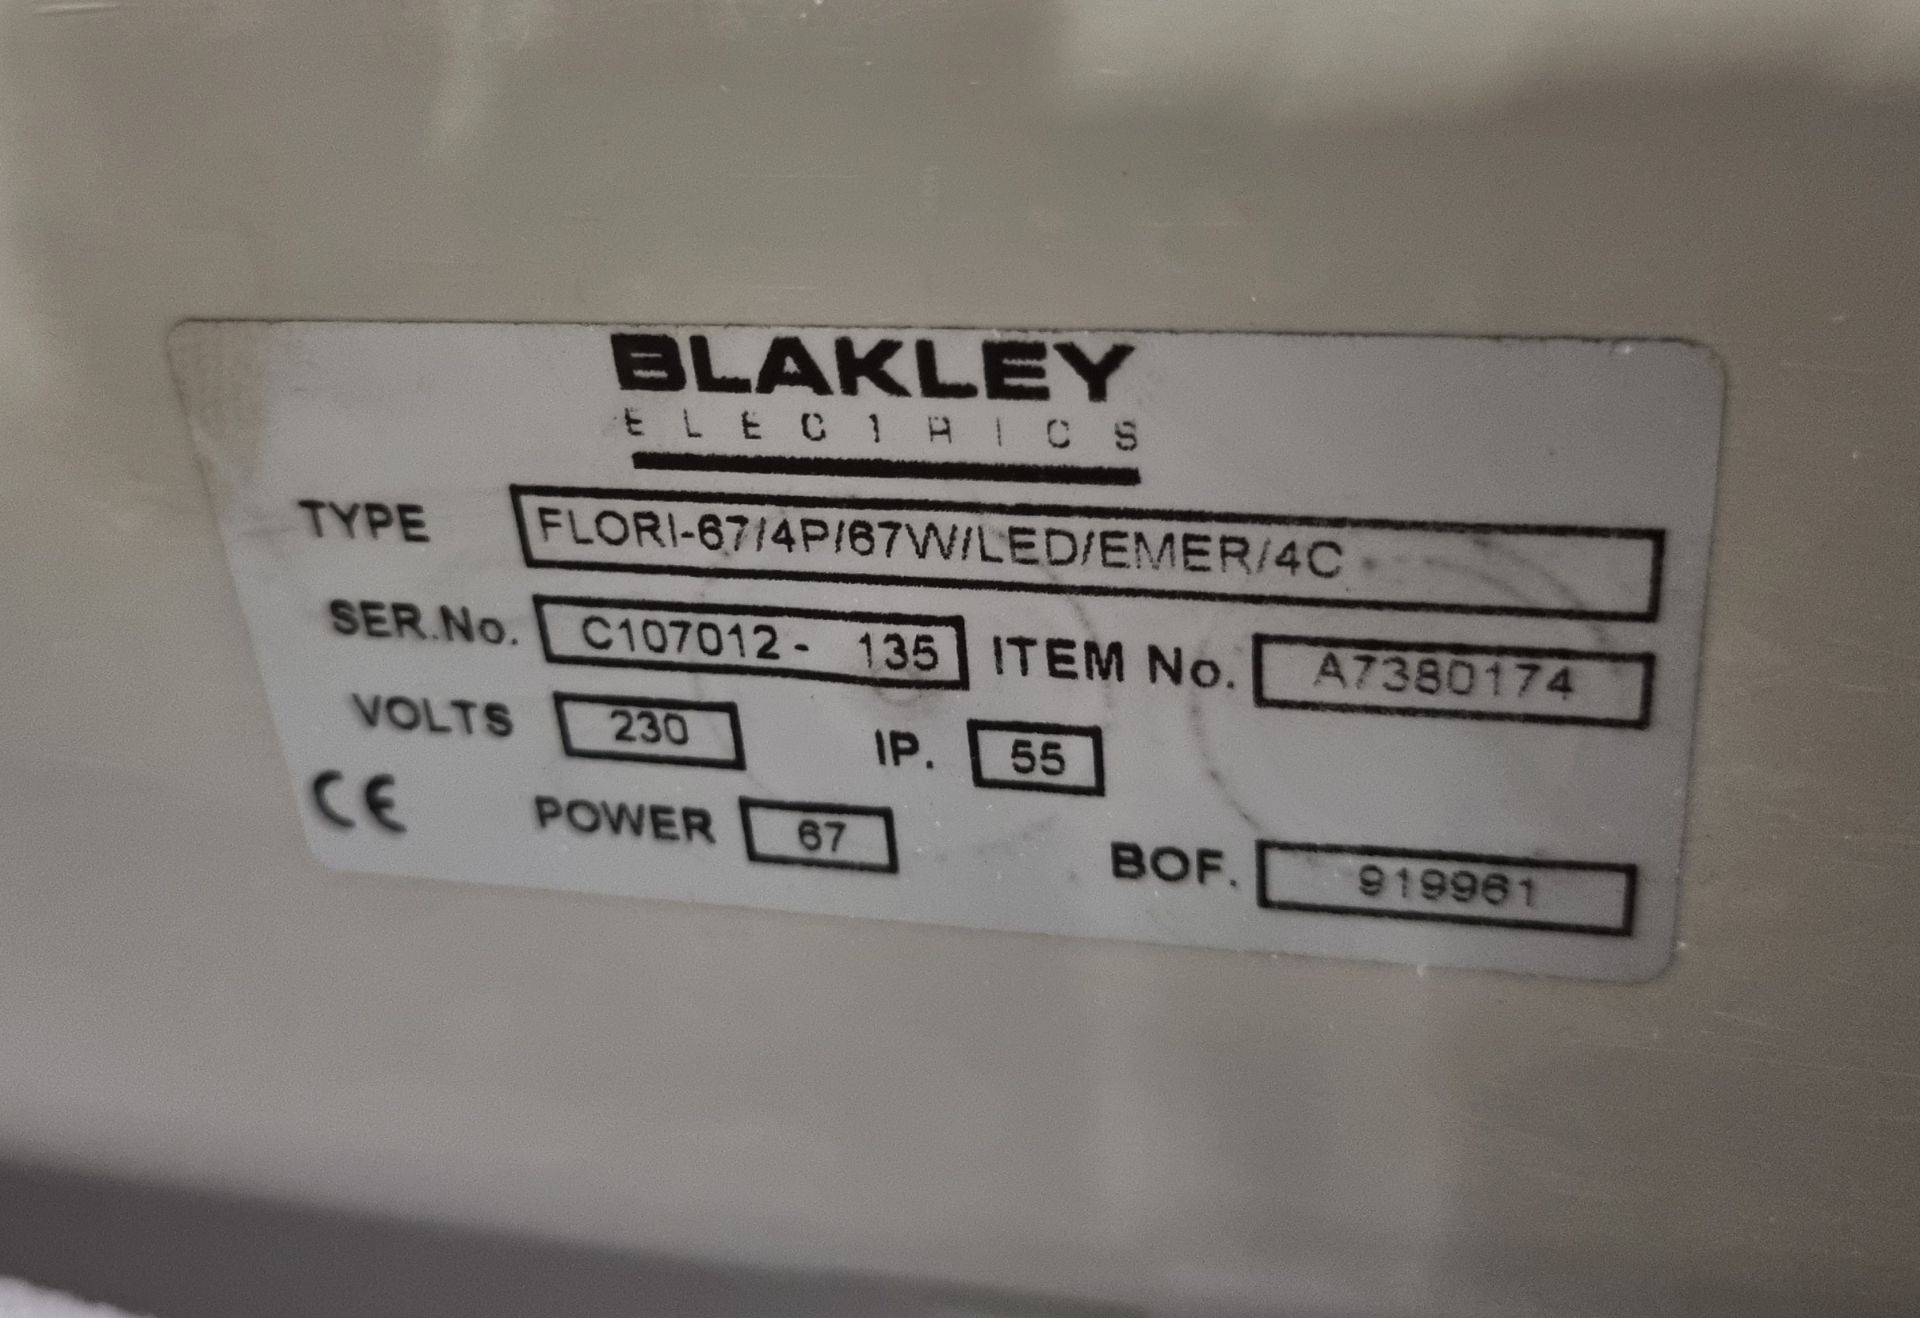 8x Blakley Light assemblies - 2x green cable FLORI-67/4P/67w/LED/EMER/4C, 6x Black cable FLORI-67/4P - Image 3 of 4